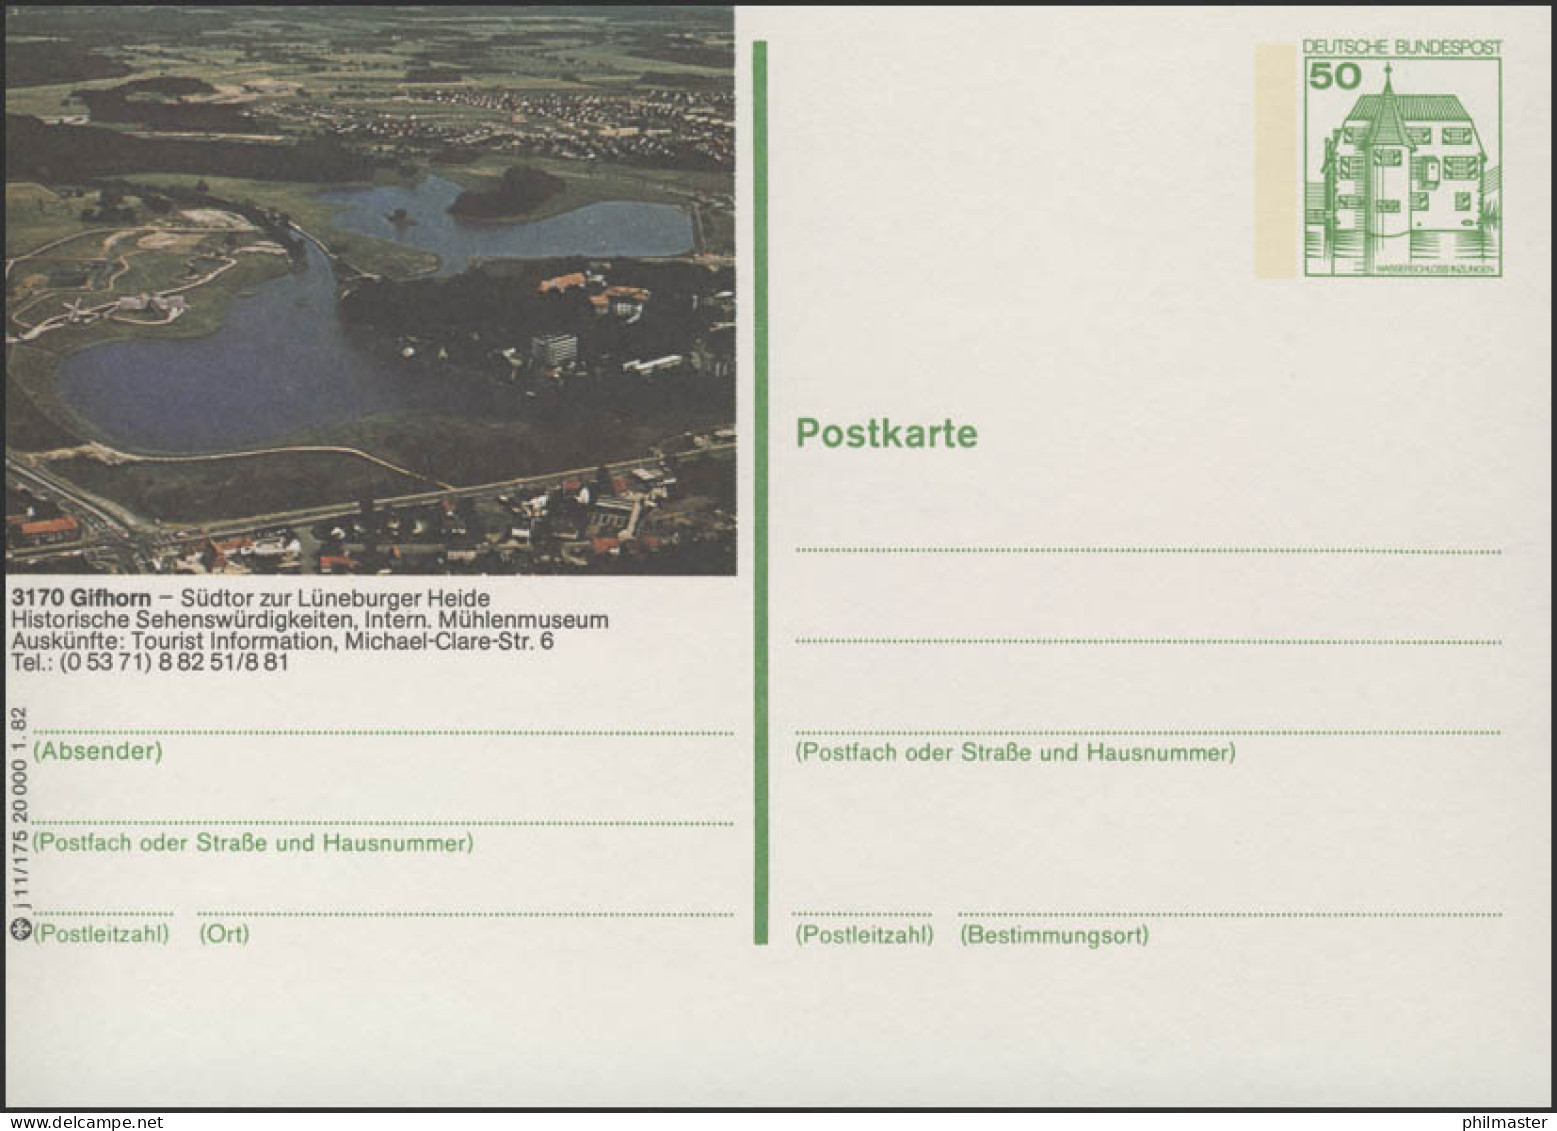 P134-j11/175 3170 Gifhorn - Luftaufnahme ** - Illustrated Postcards - Mint